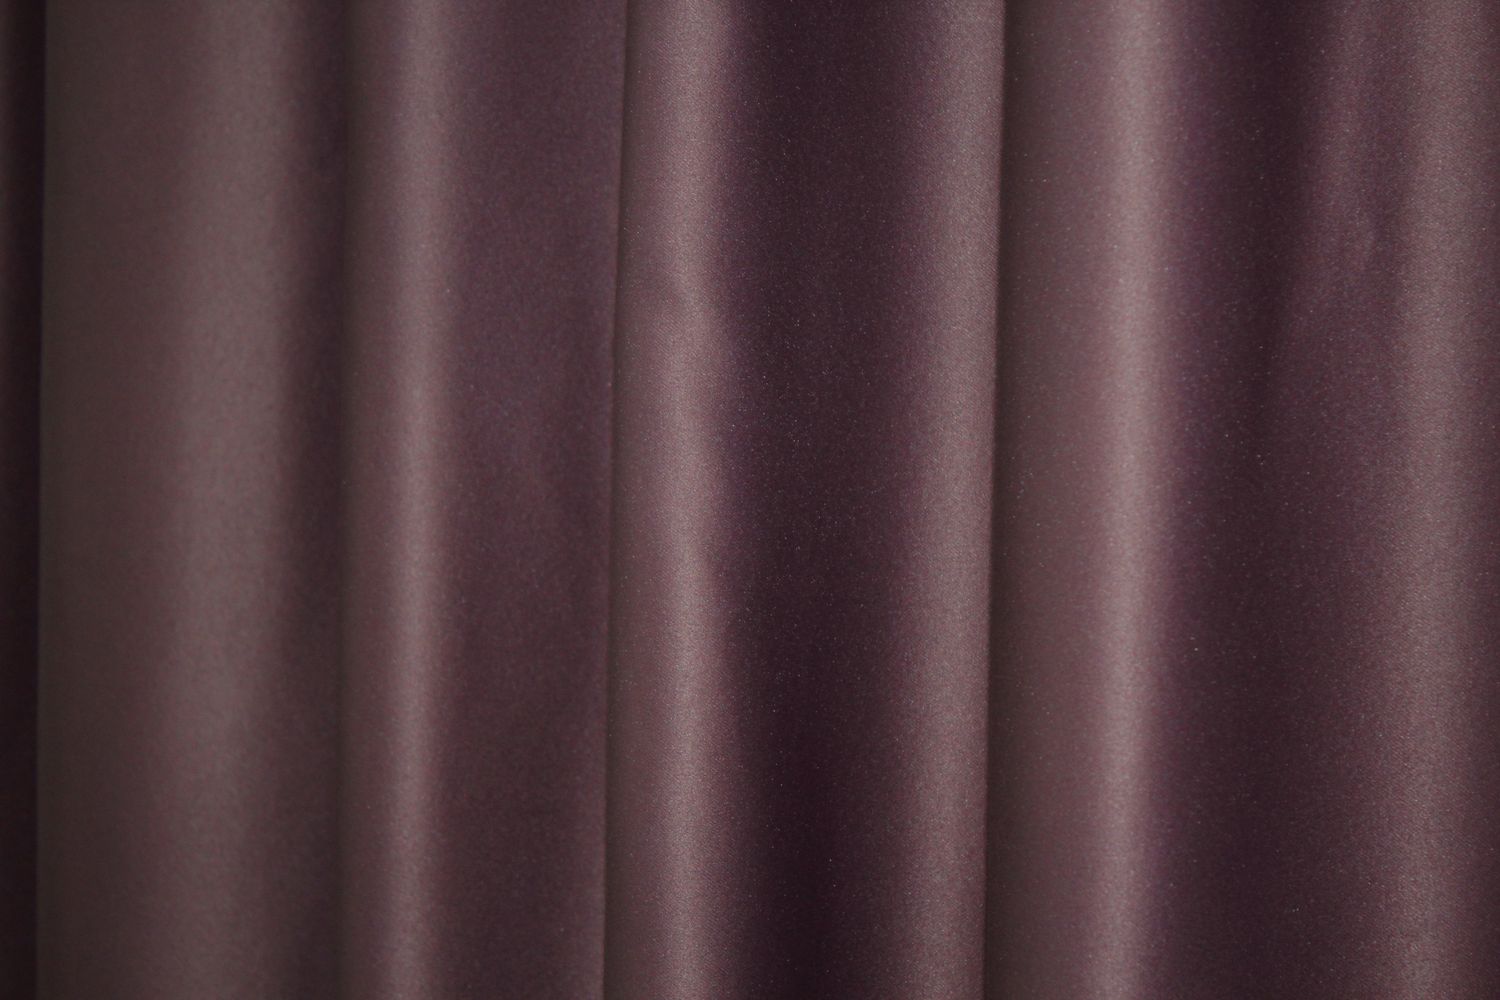 Комплект штор из ткани блэкаут "Fusion Dimout" цвет марсала 828ш, Марсала, Комплект штор (2шт. 1,5х2,7м.), 1,5 м., 2,7 м., 150, 270, 2 - 3 м., В комплекте 2 шт., Тесьма